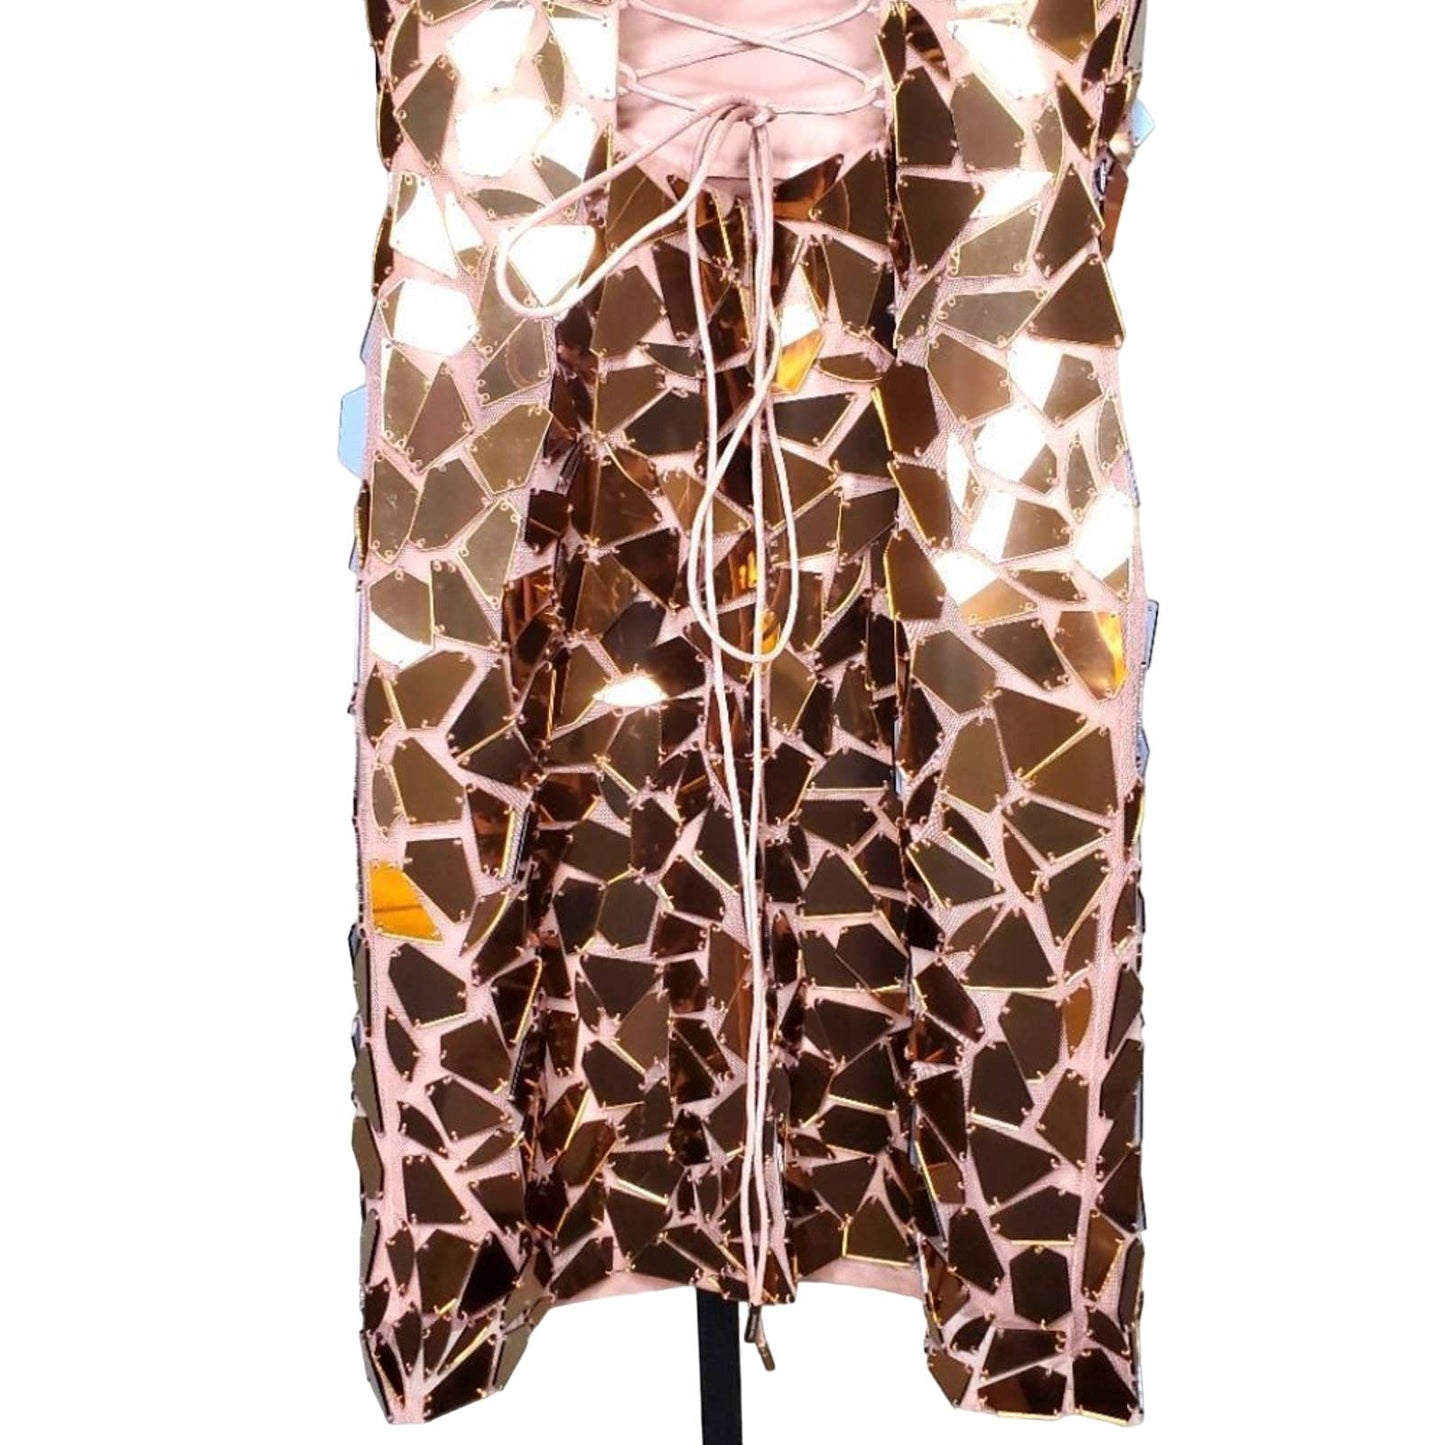 Sherri Hill Short Strapless Scuba Dress with Lace Up Back, Bronze, Size 00